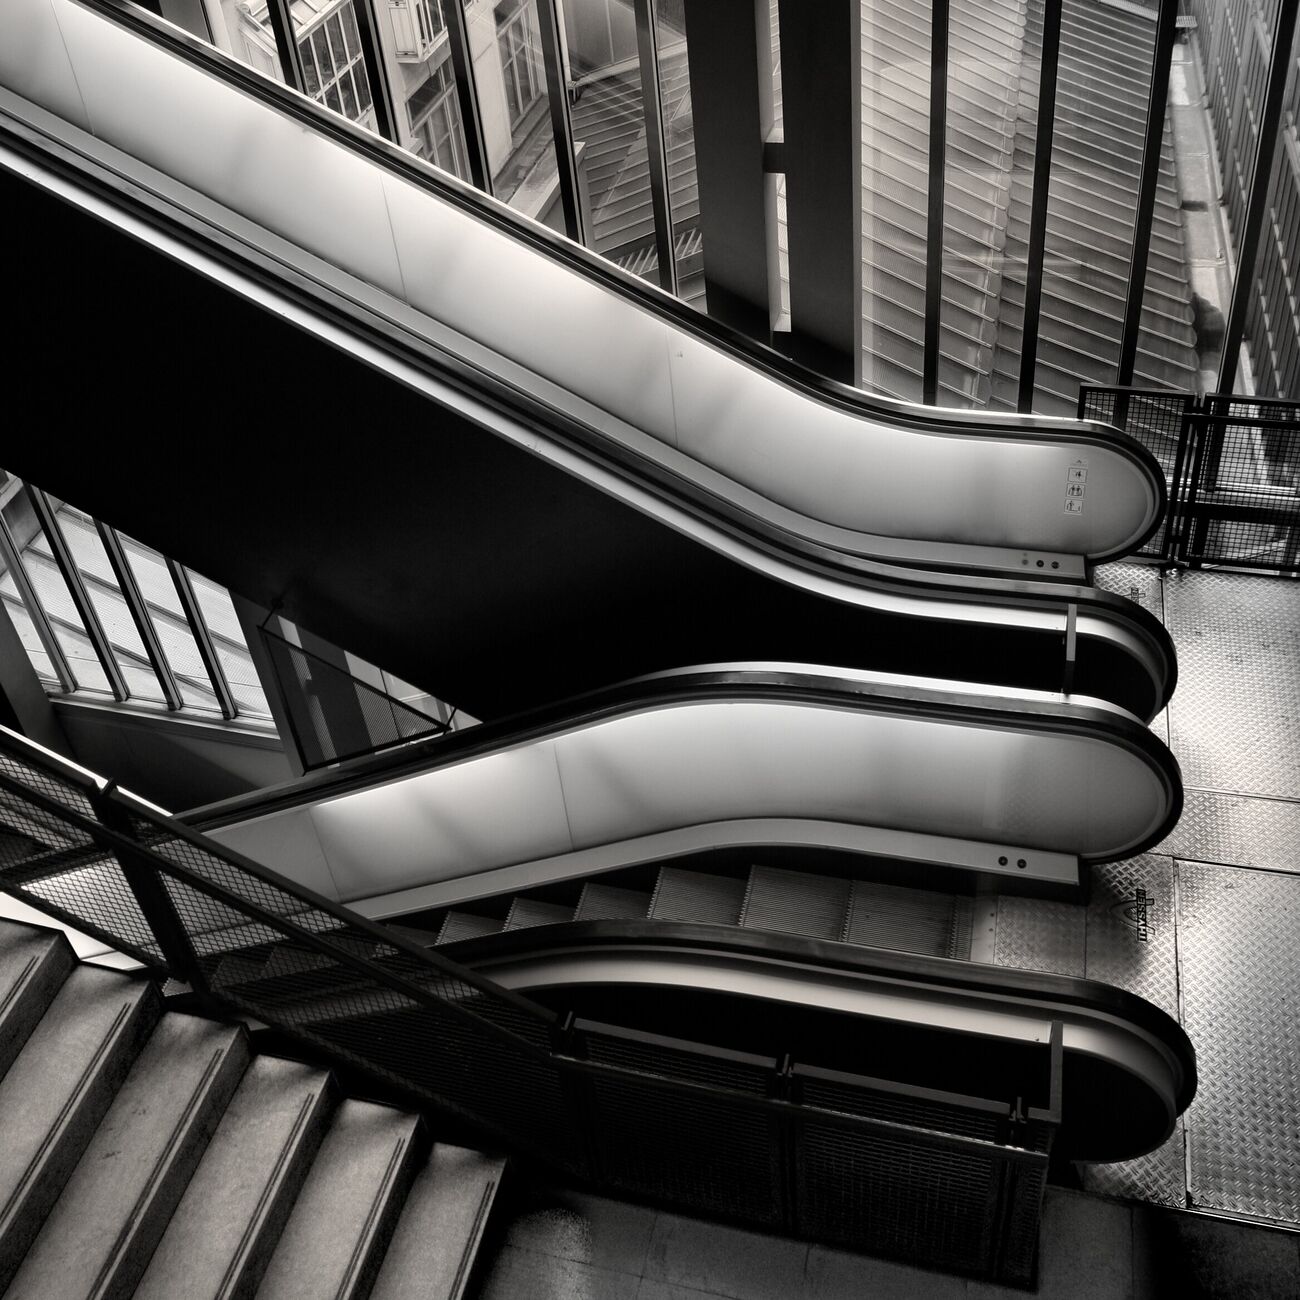 Tirage photographique 23 x 23 cm, Orsay museum escalator. Ref-564-1 - Denis Olivier Photographie